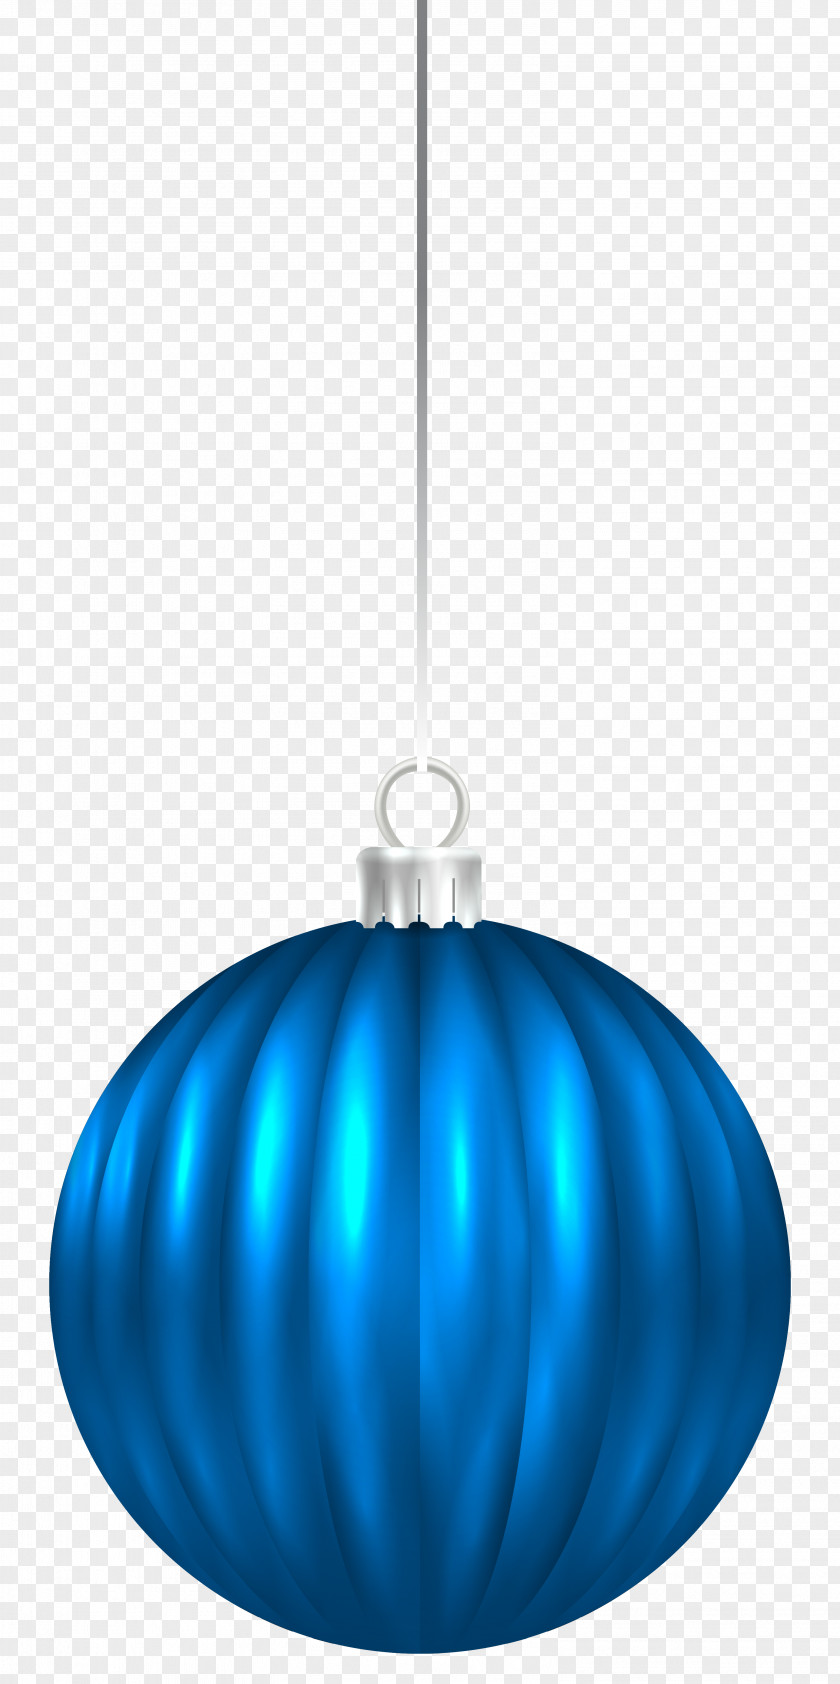 Blue Christmas Ball Ornament Clip Art Image Lighting Sphere Pattern PNG